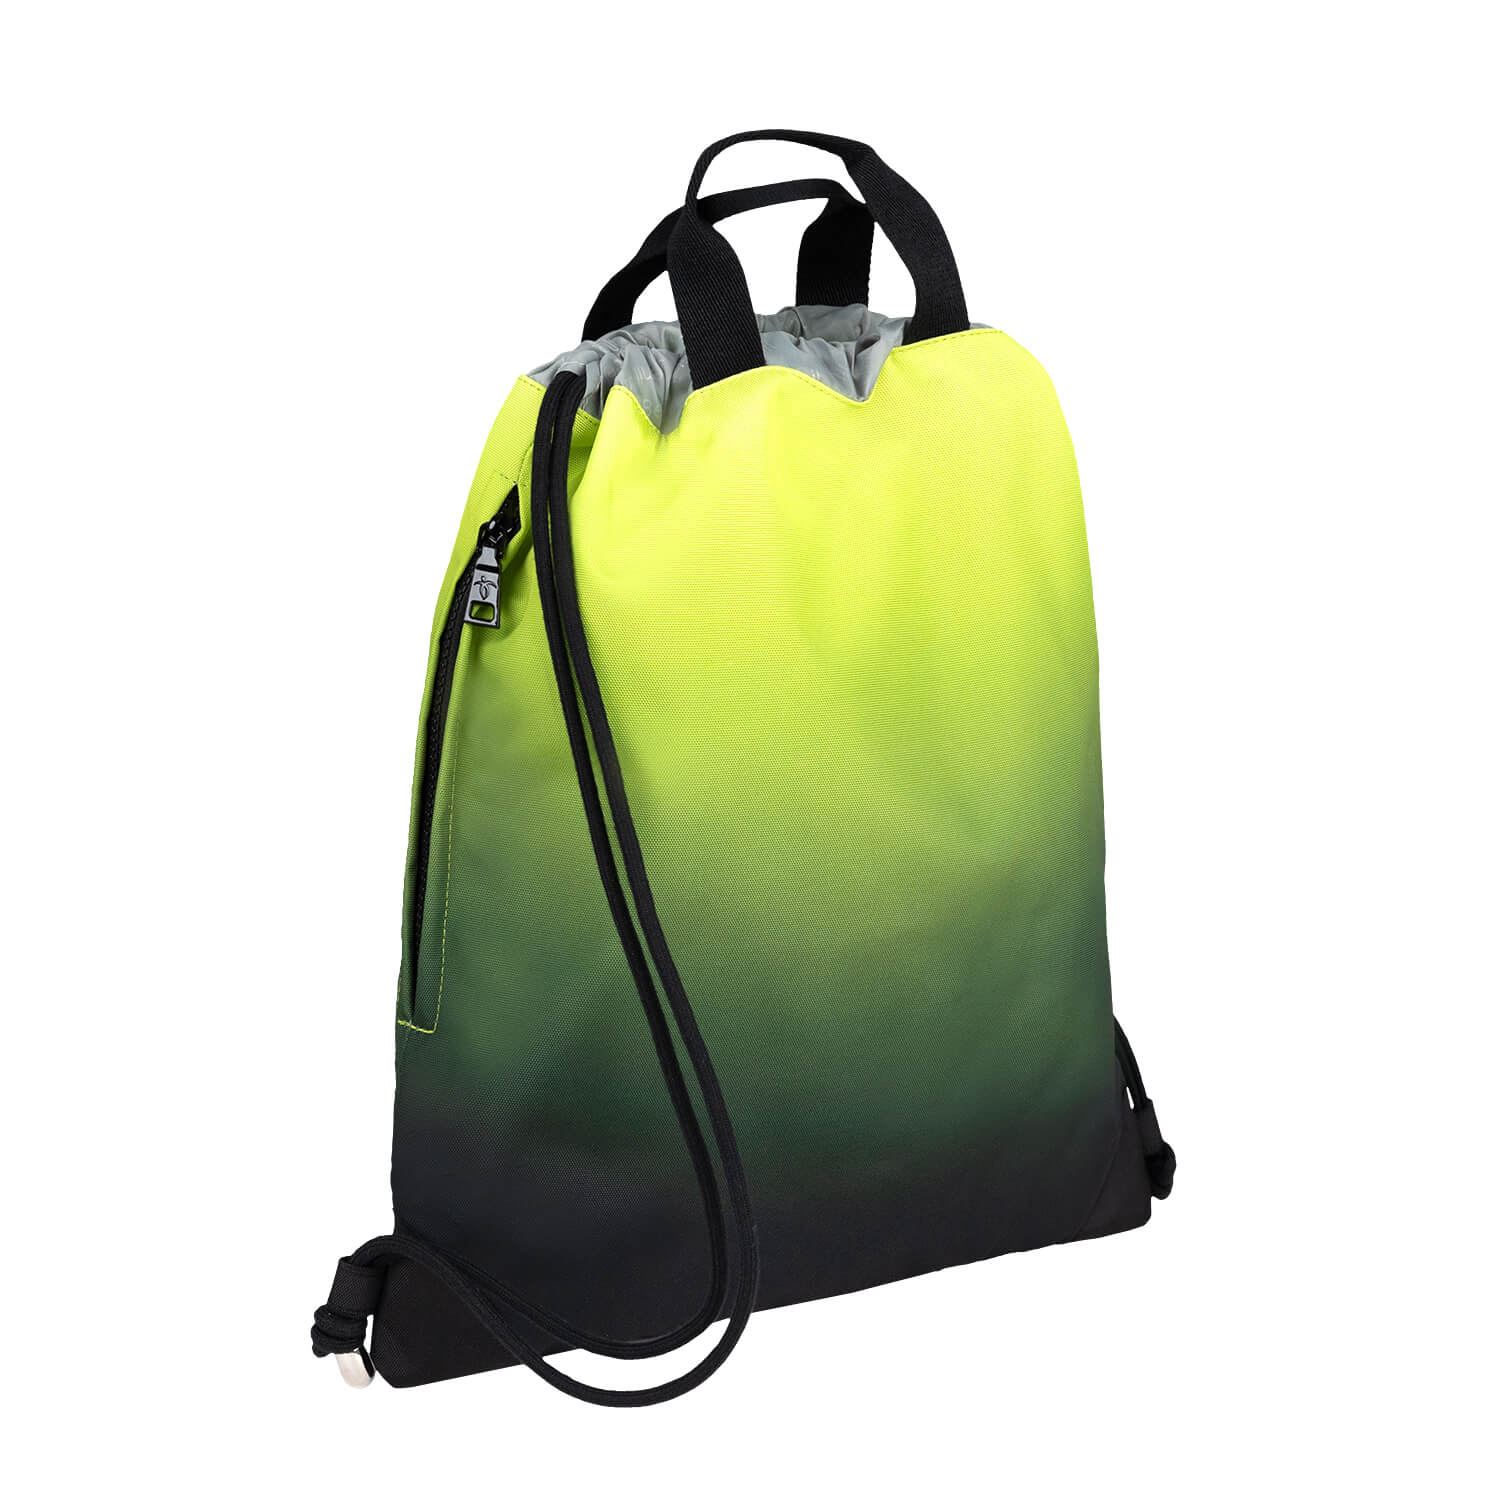 Pencil case Twist of Lime with GRATIS Gym bag Black Green